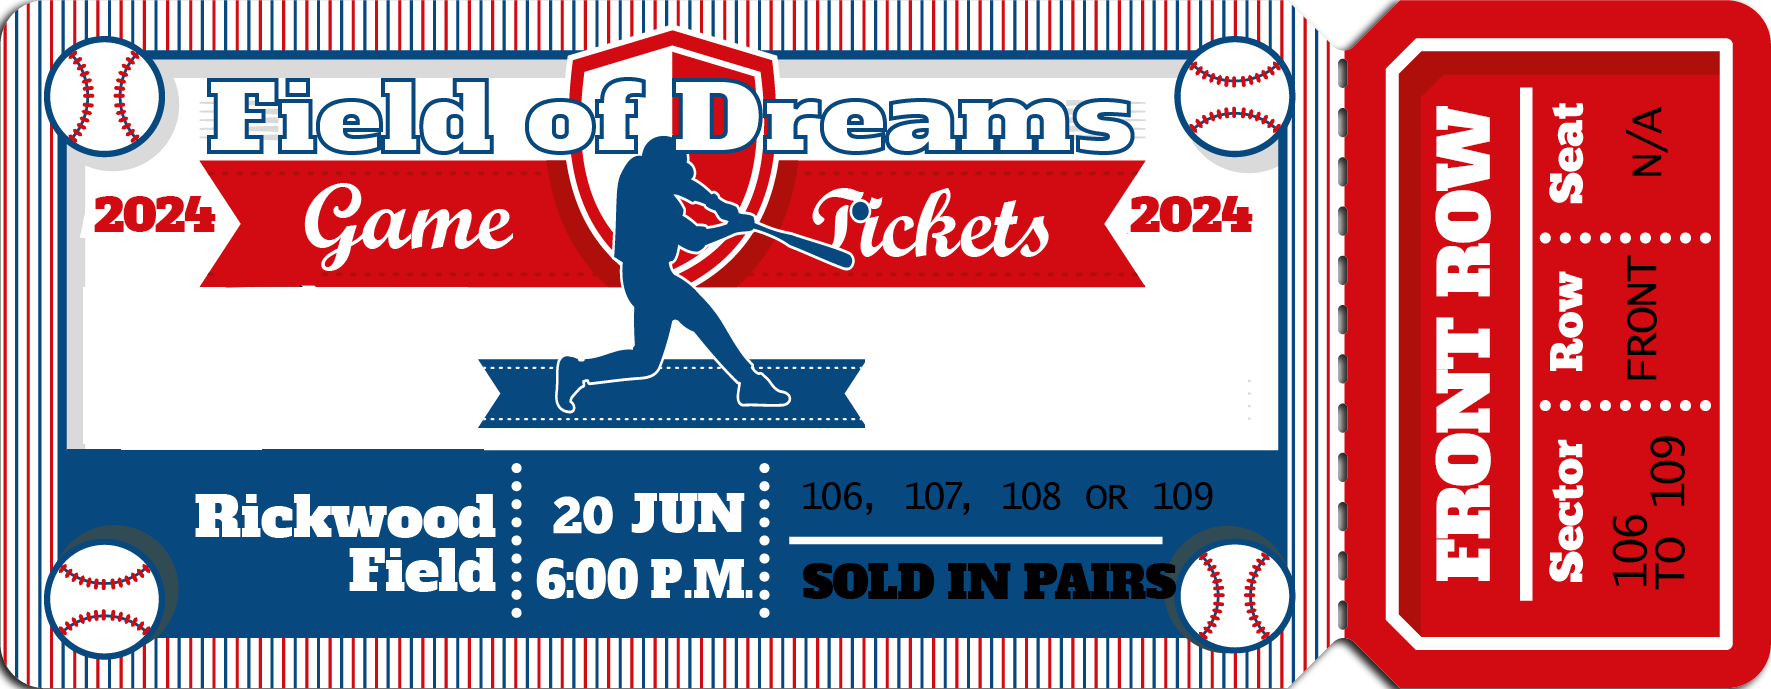 Field of Dreams Game Hotels & Tickets 2024 Birmingham, Alabama